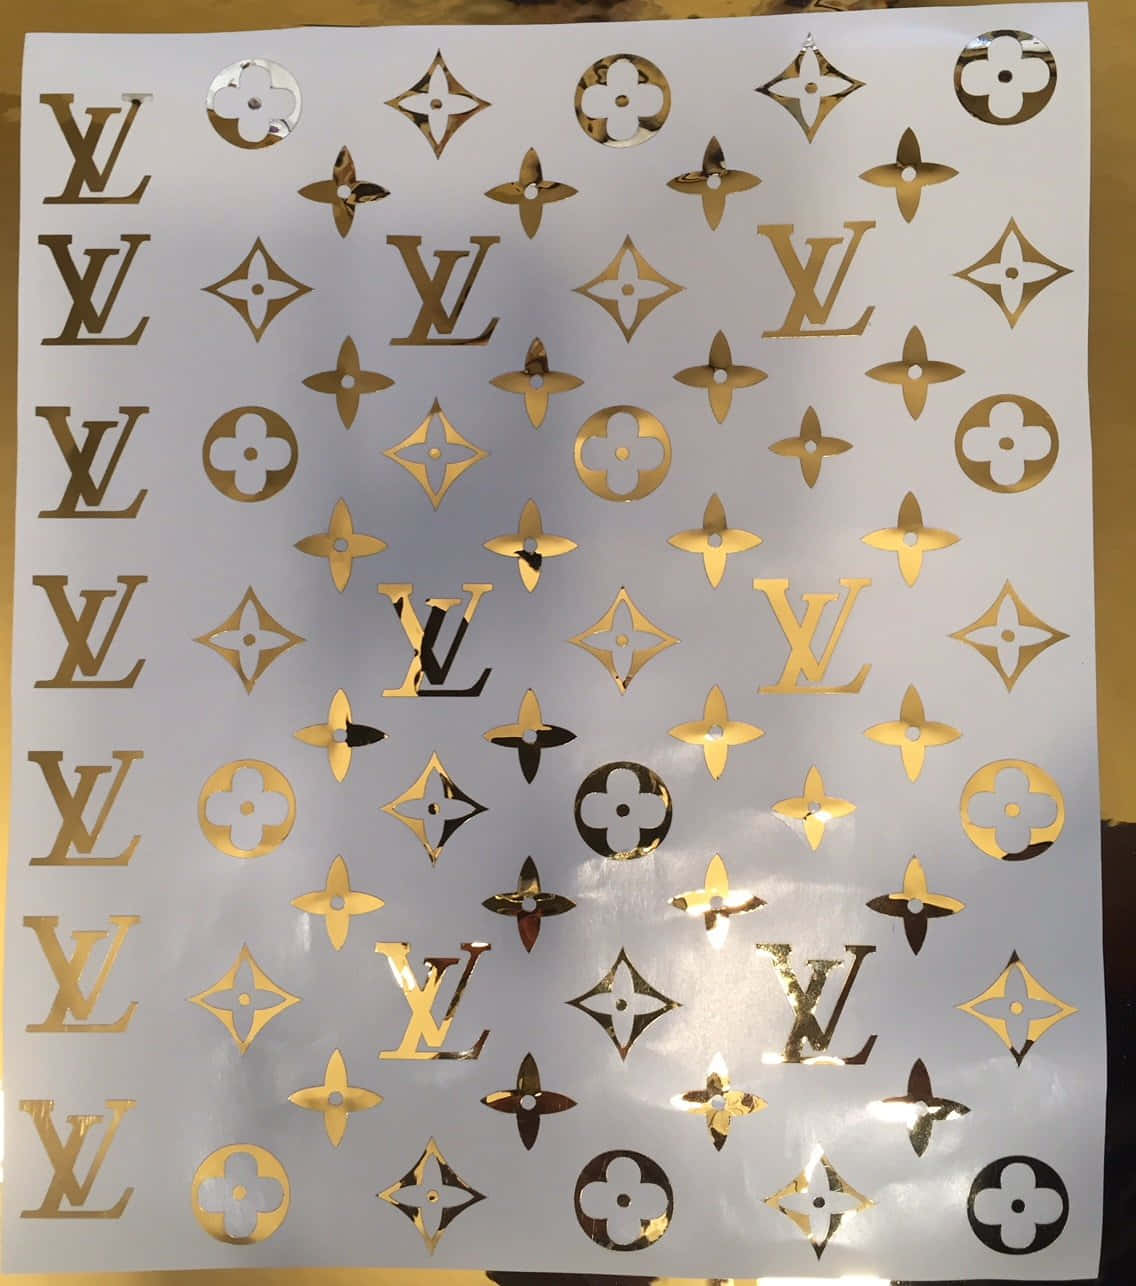 Download The iconic Louis Vuitton Logo. Wallpaper